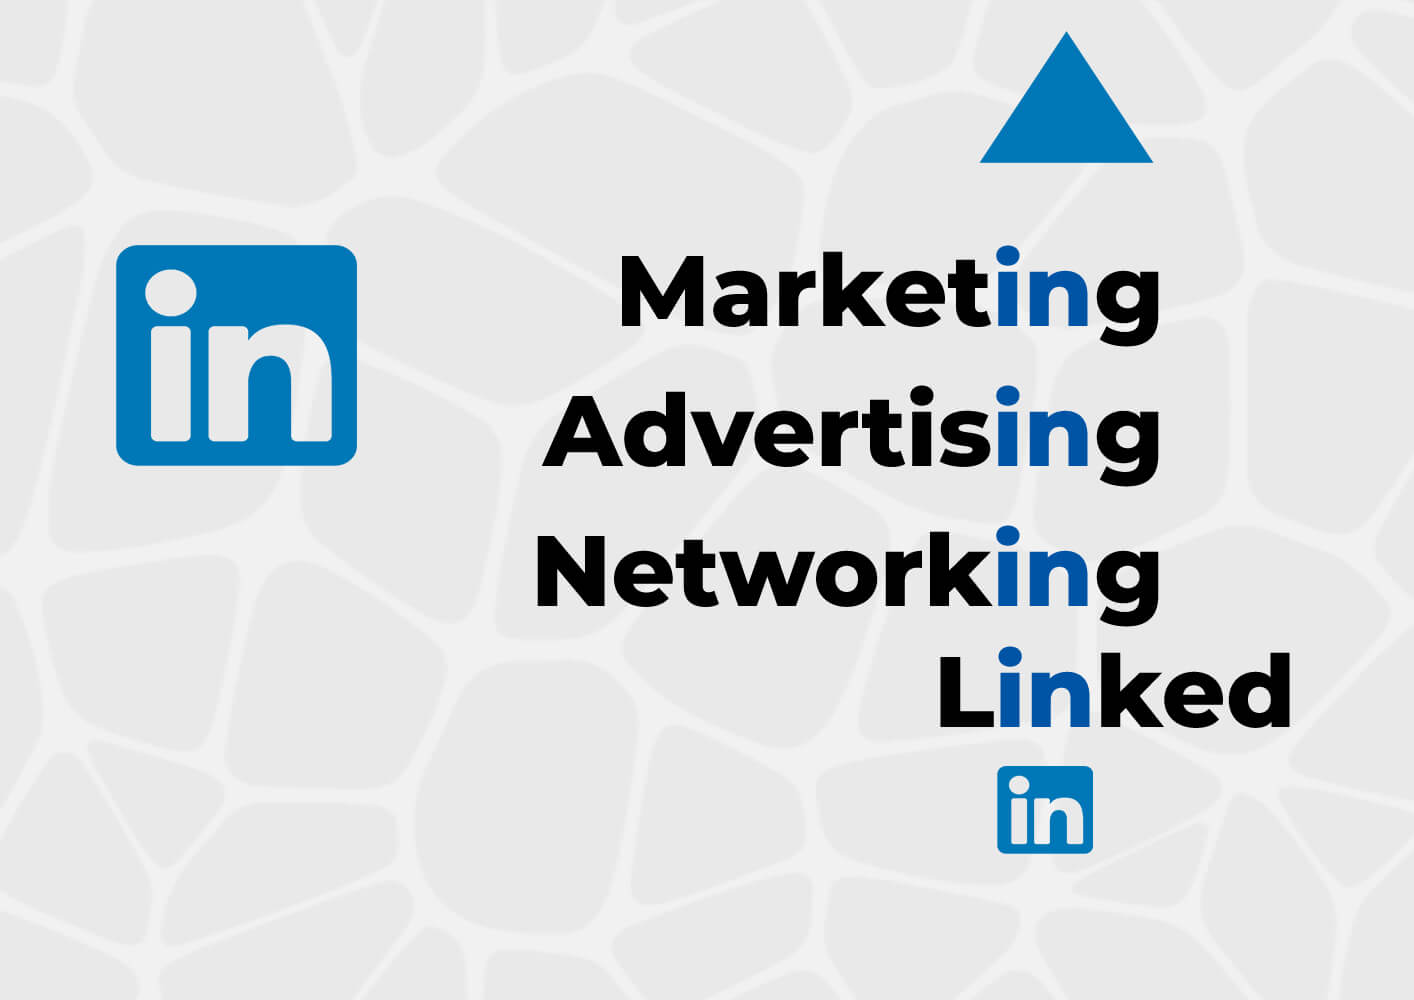 LinkedIn Marketing Services for Brand Awareness for Businesses